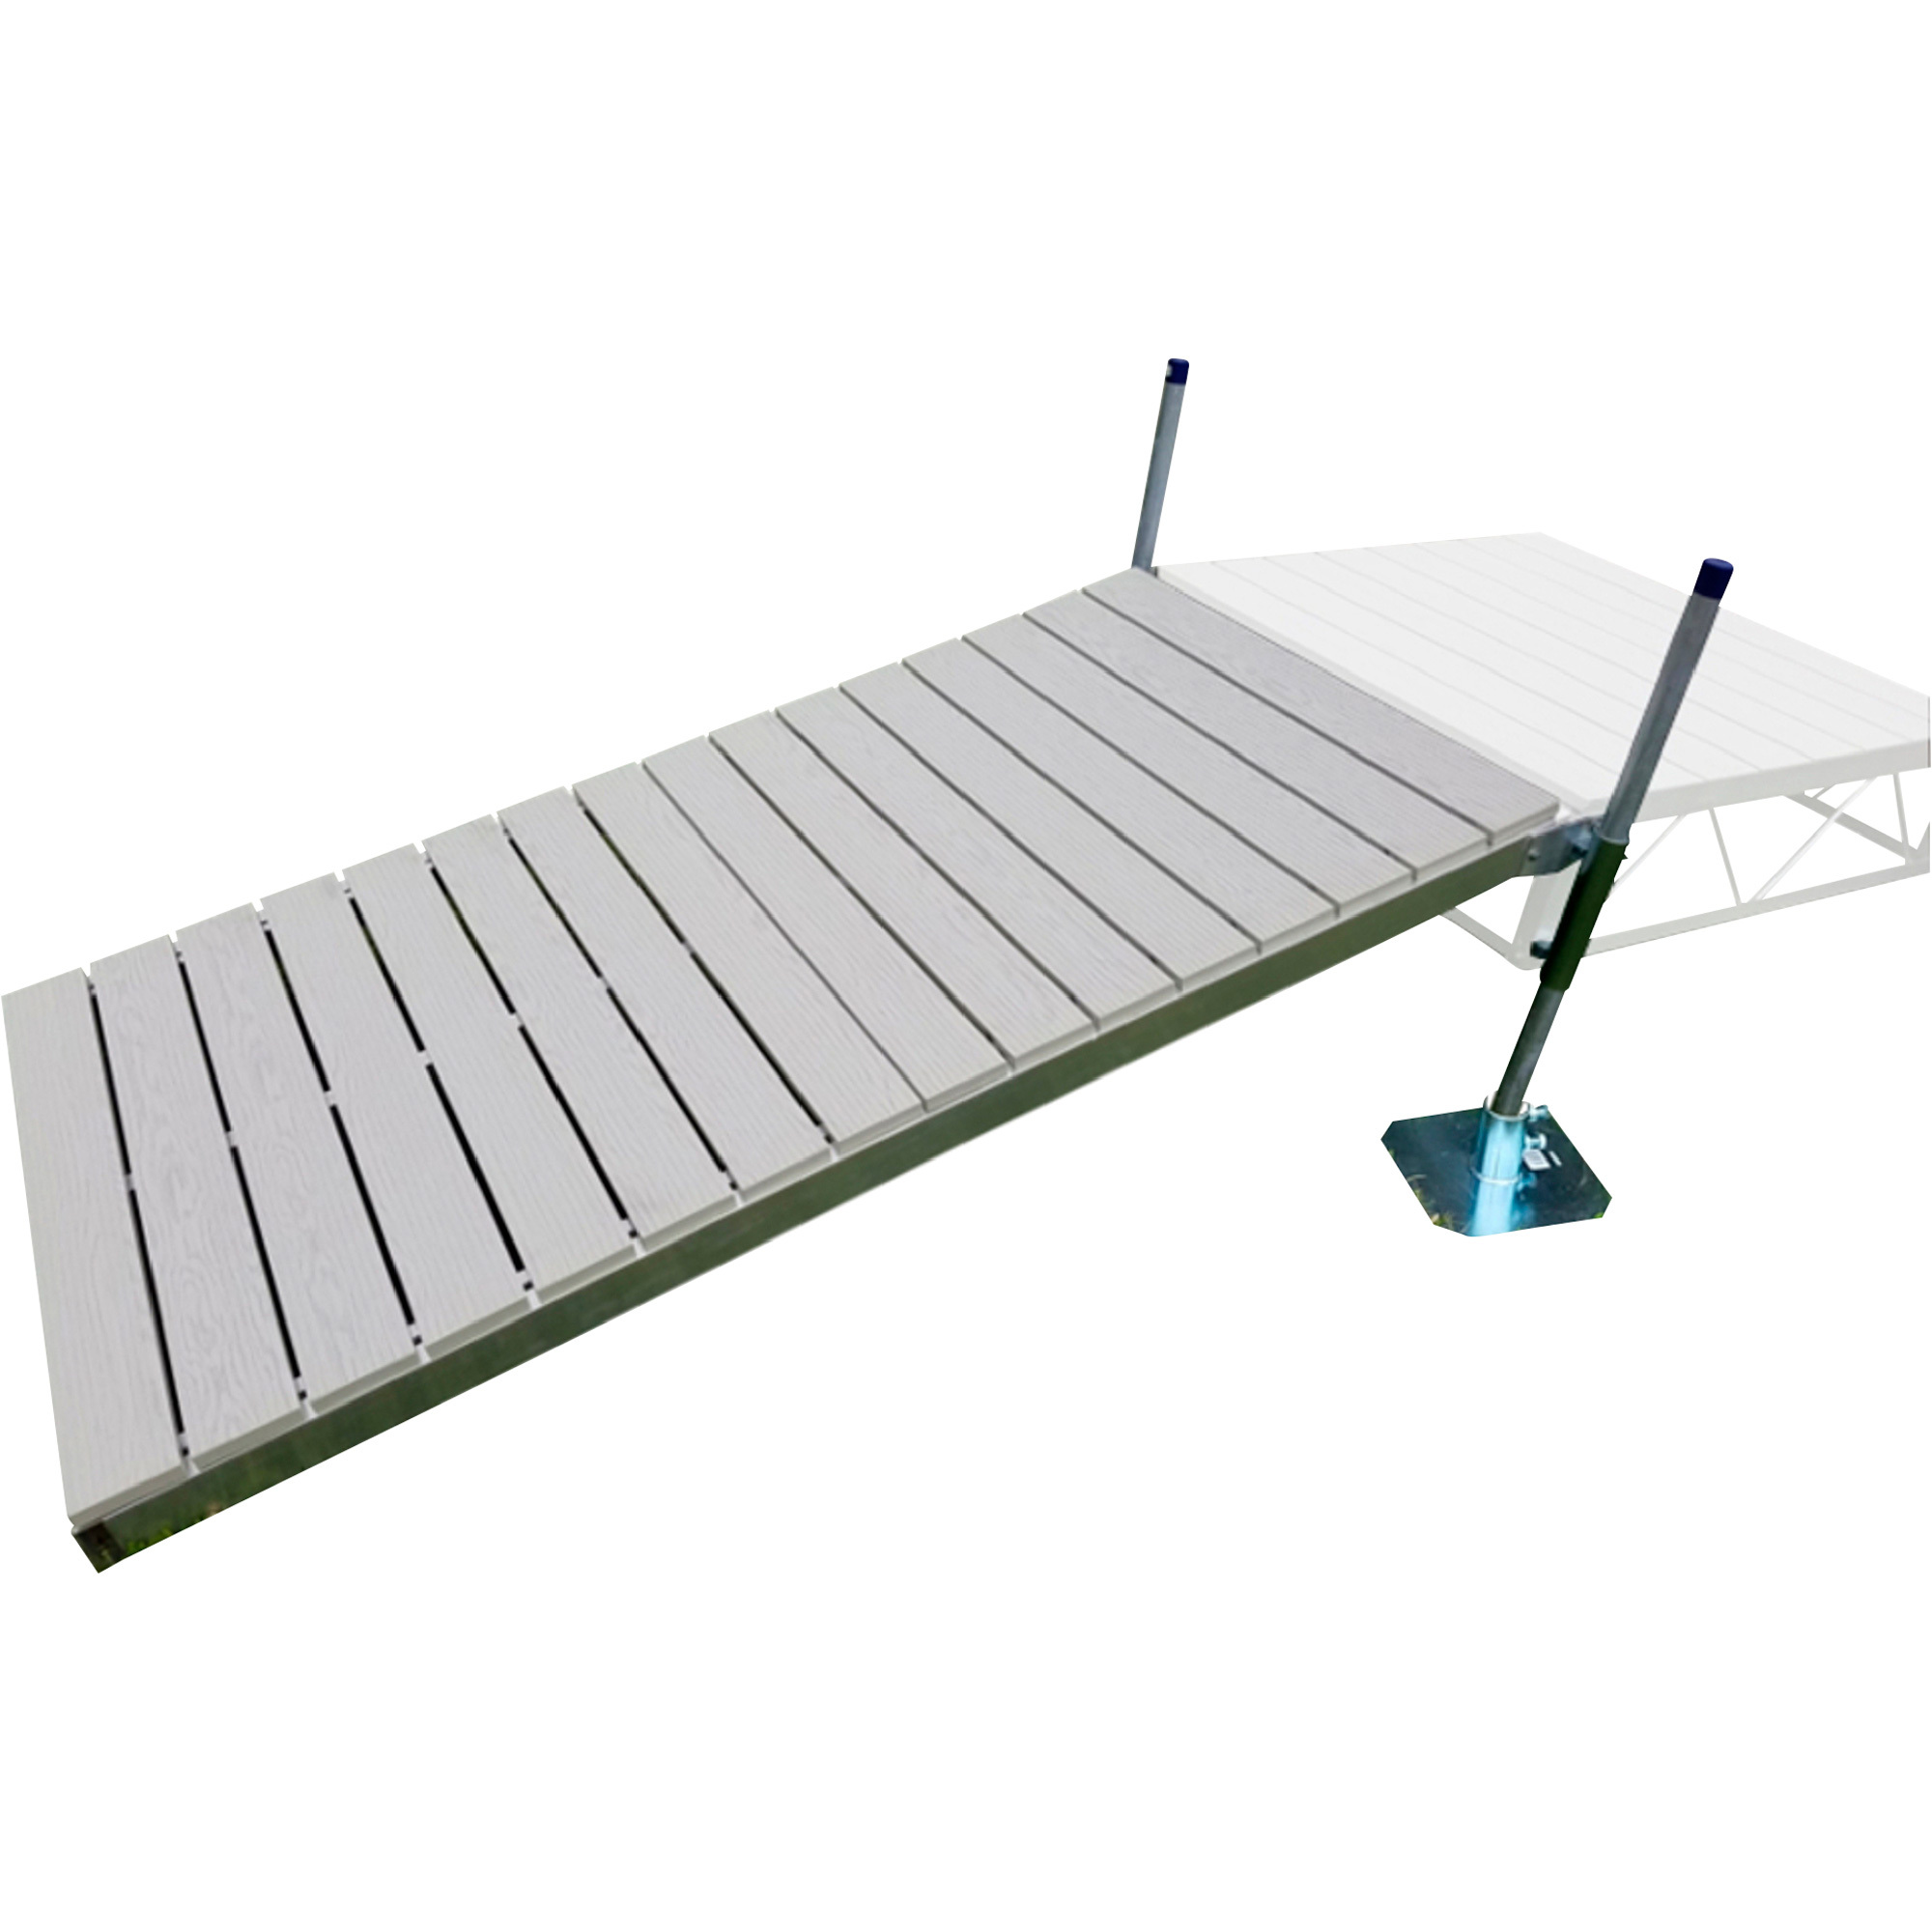 Patriot Docks 4ft. x 8ft. Universal Shore Ramp Kit â Gray Aluminum Deck Panel, Model 10353